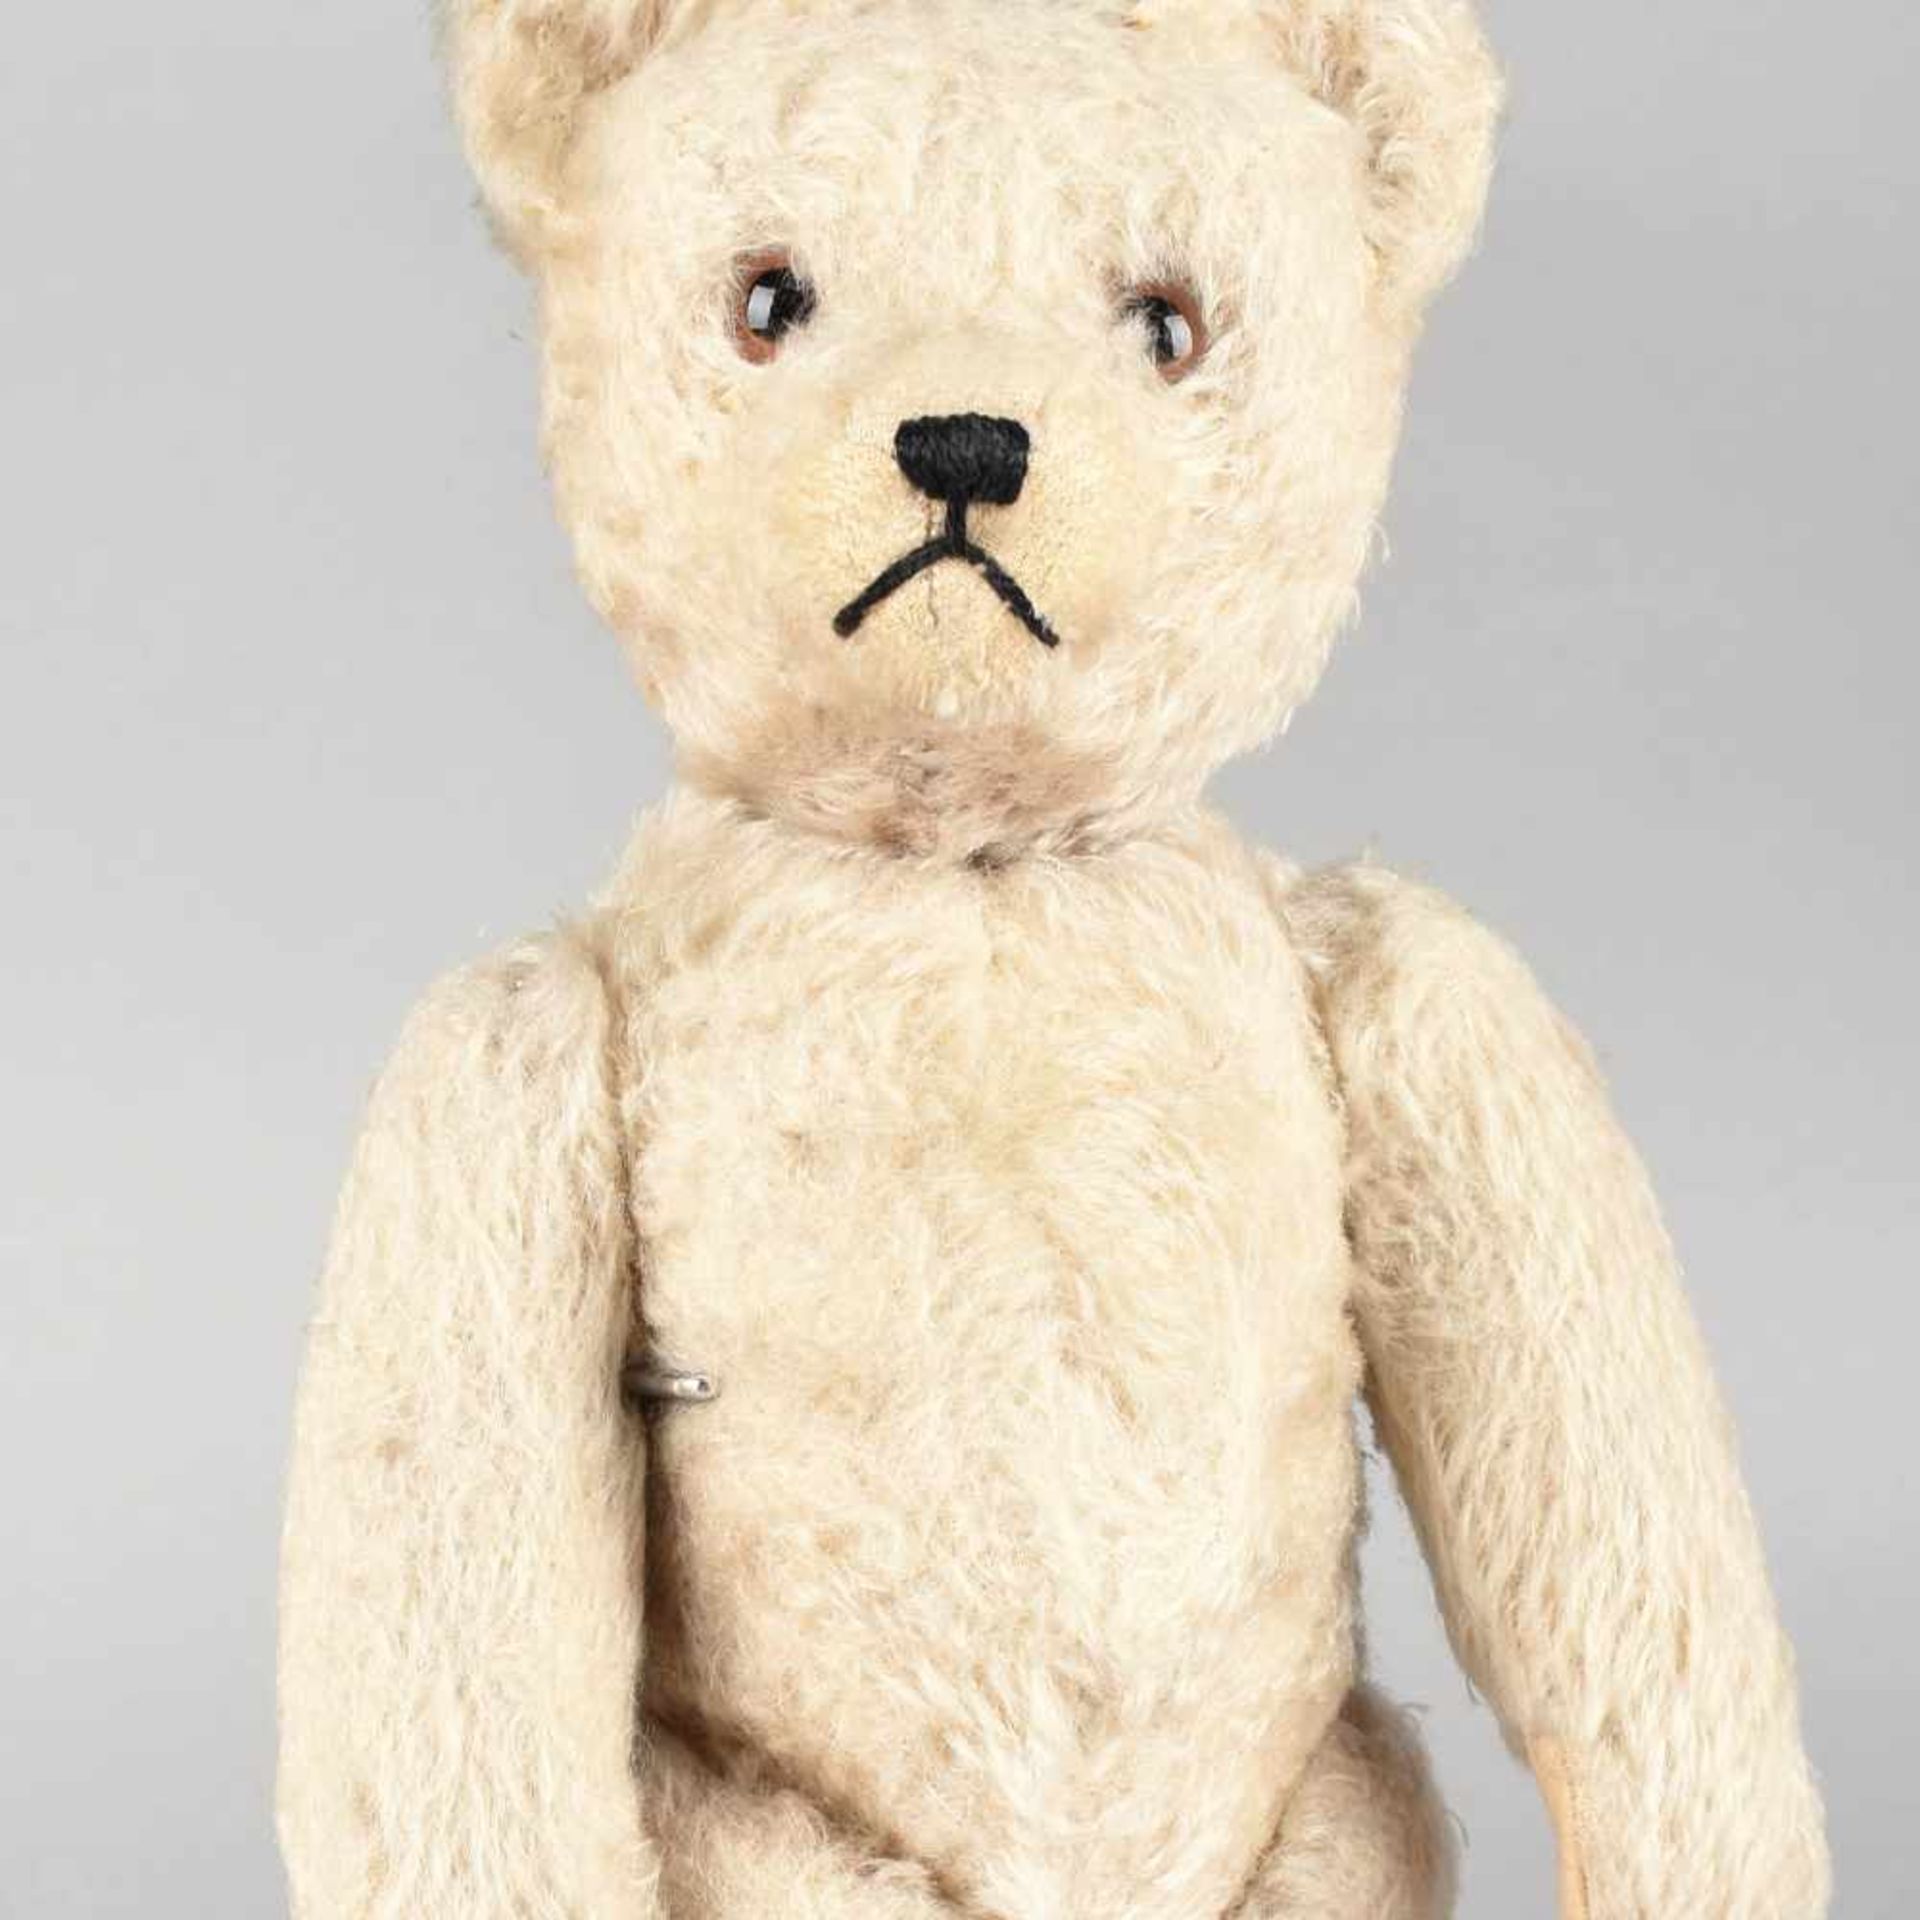 Teddybär Hersteller: Steiff, helles Mohairfell, Körper strohgefüllt, Glasaugen, gestickte Schnauze